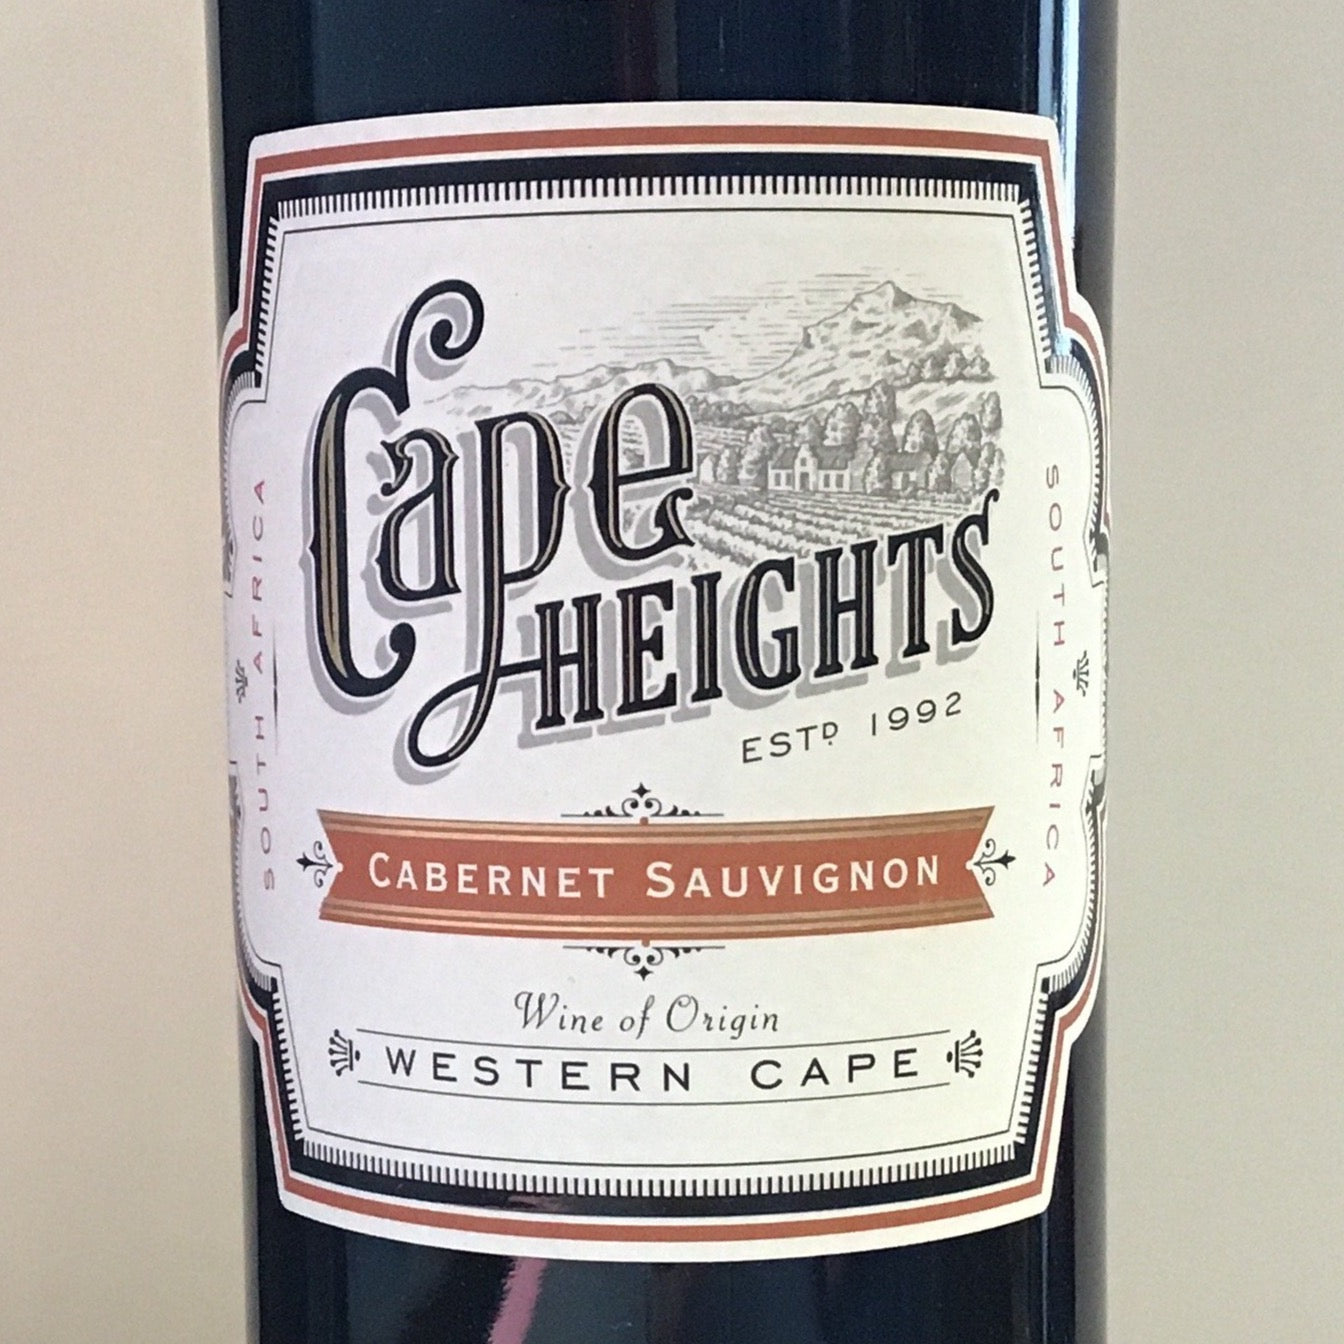 Cape Heights - Cabernet Sauvignon